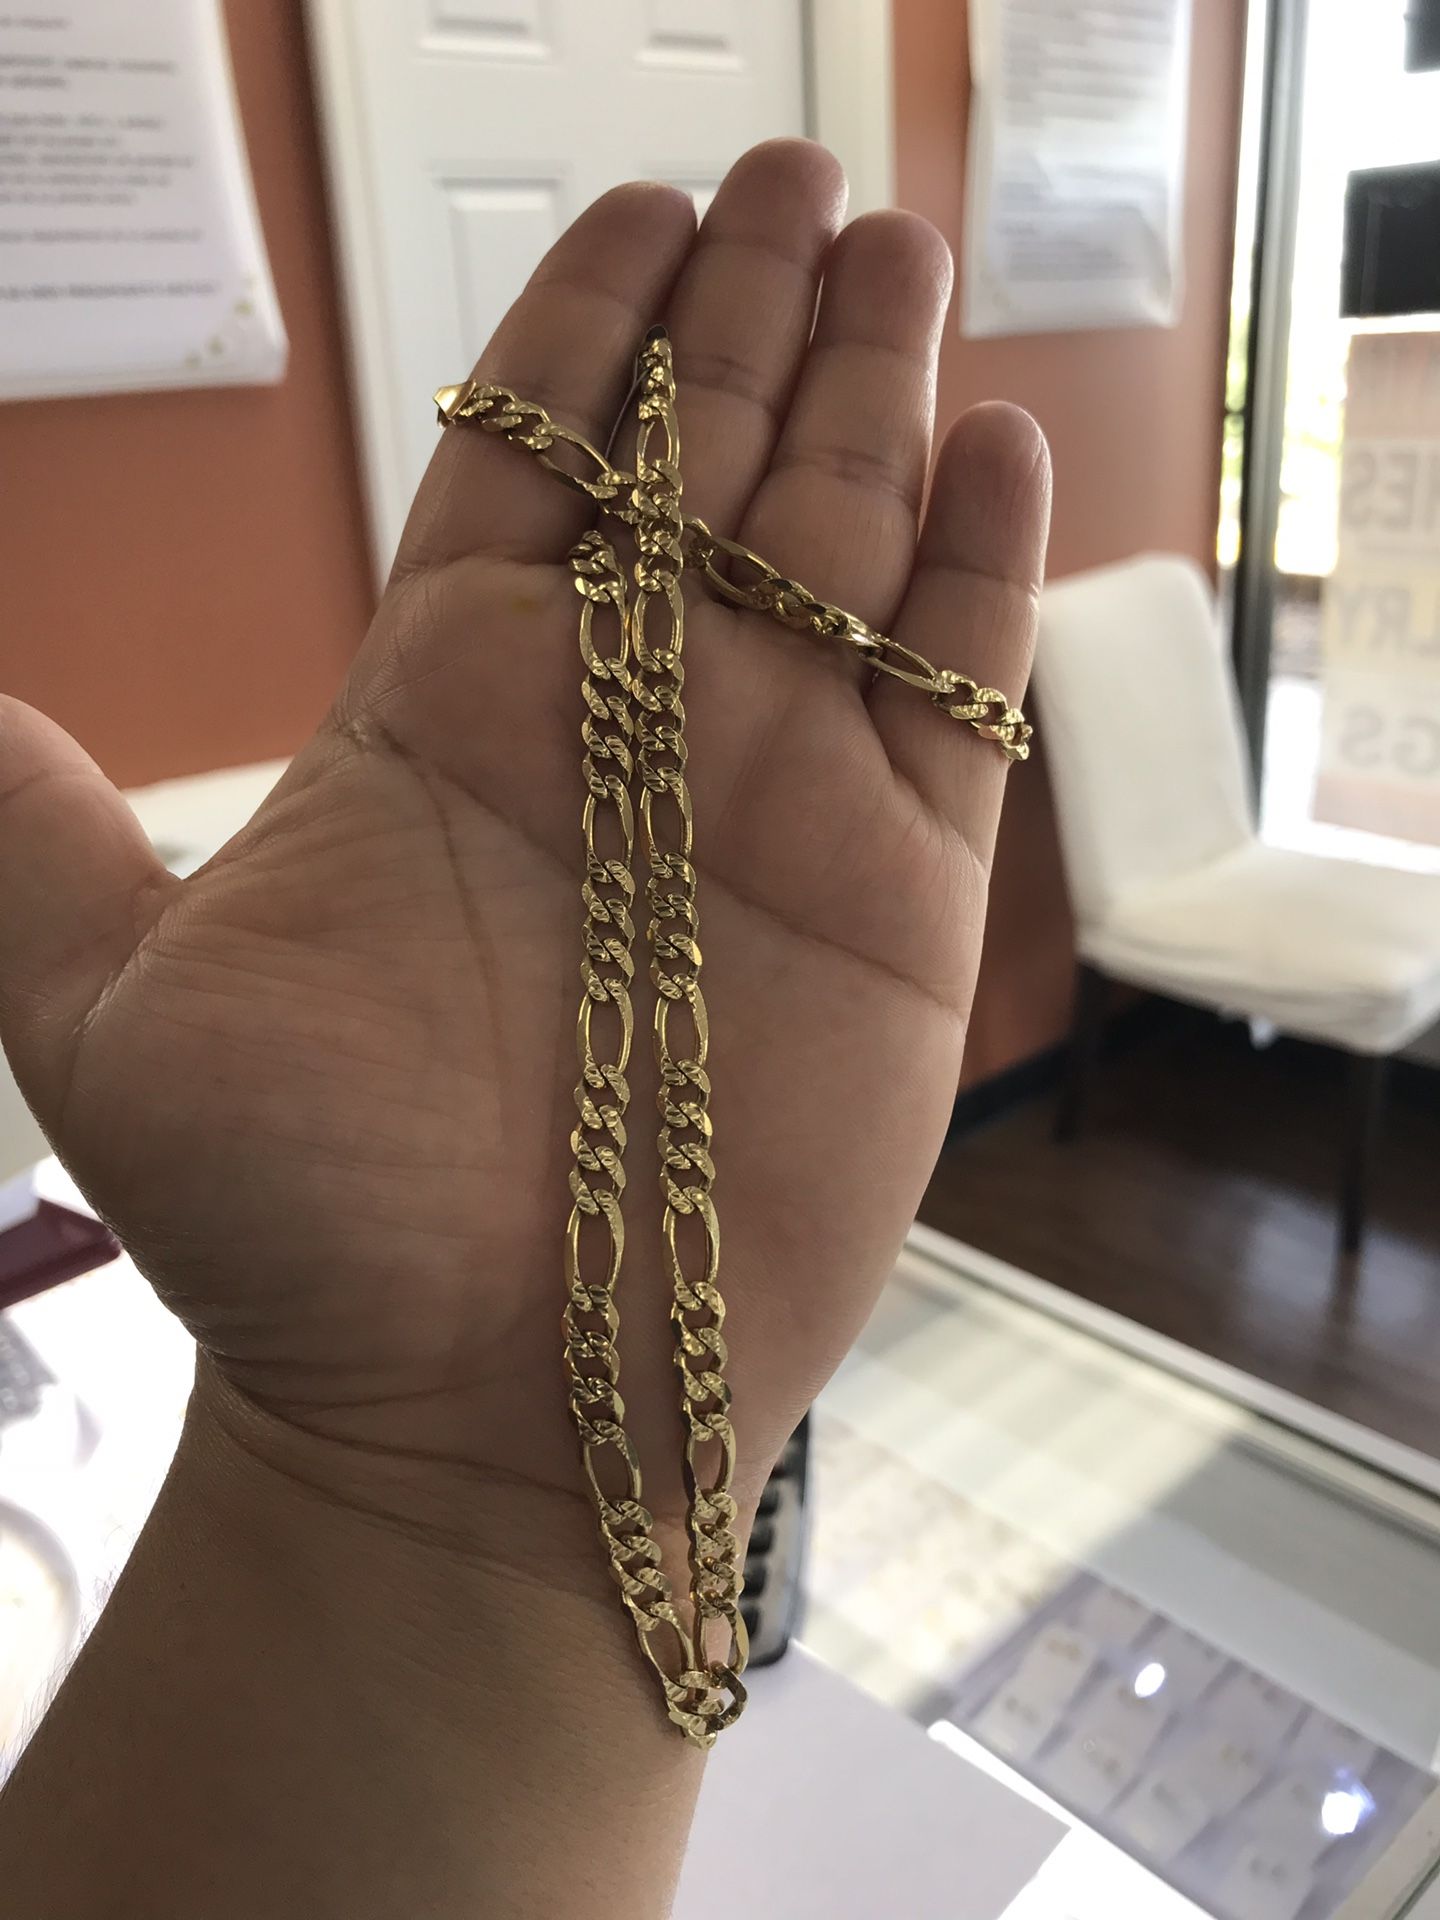 Cadena de hombre de oro de 14k / 14k gold Men chain.